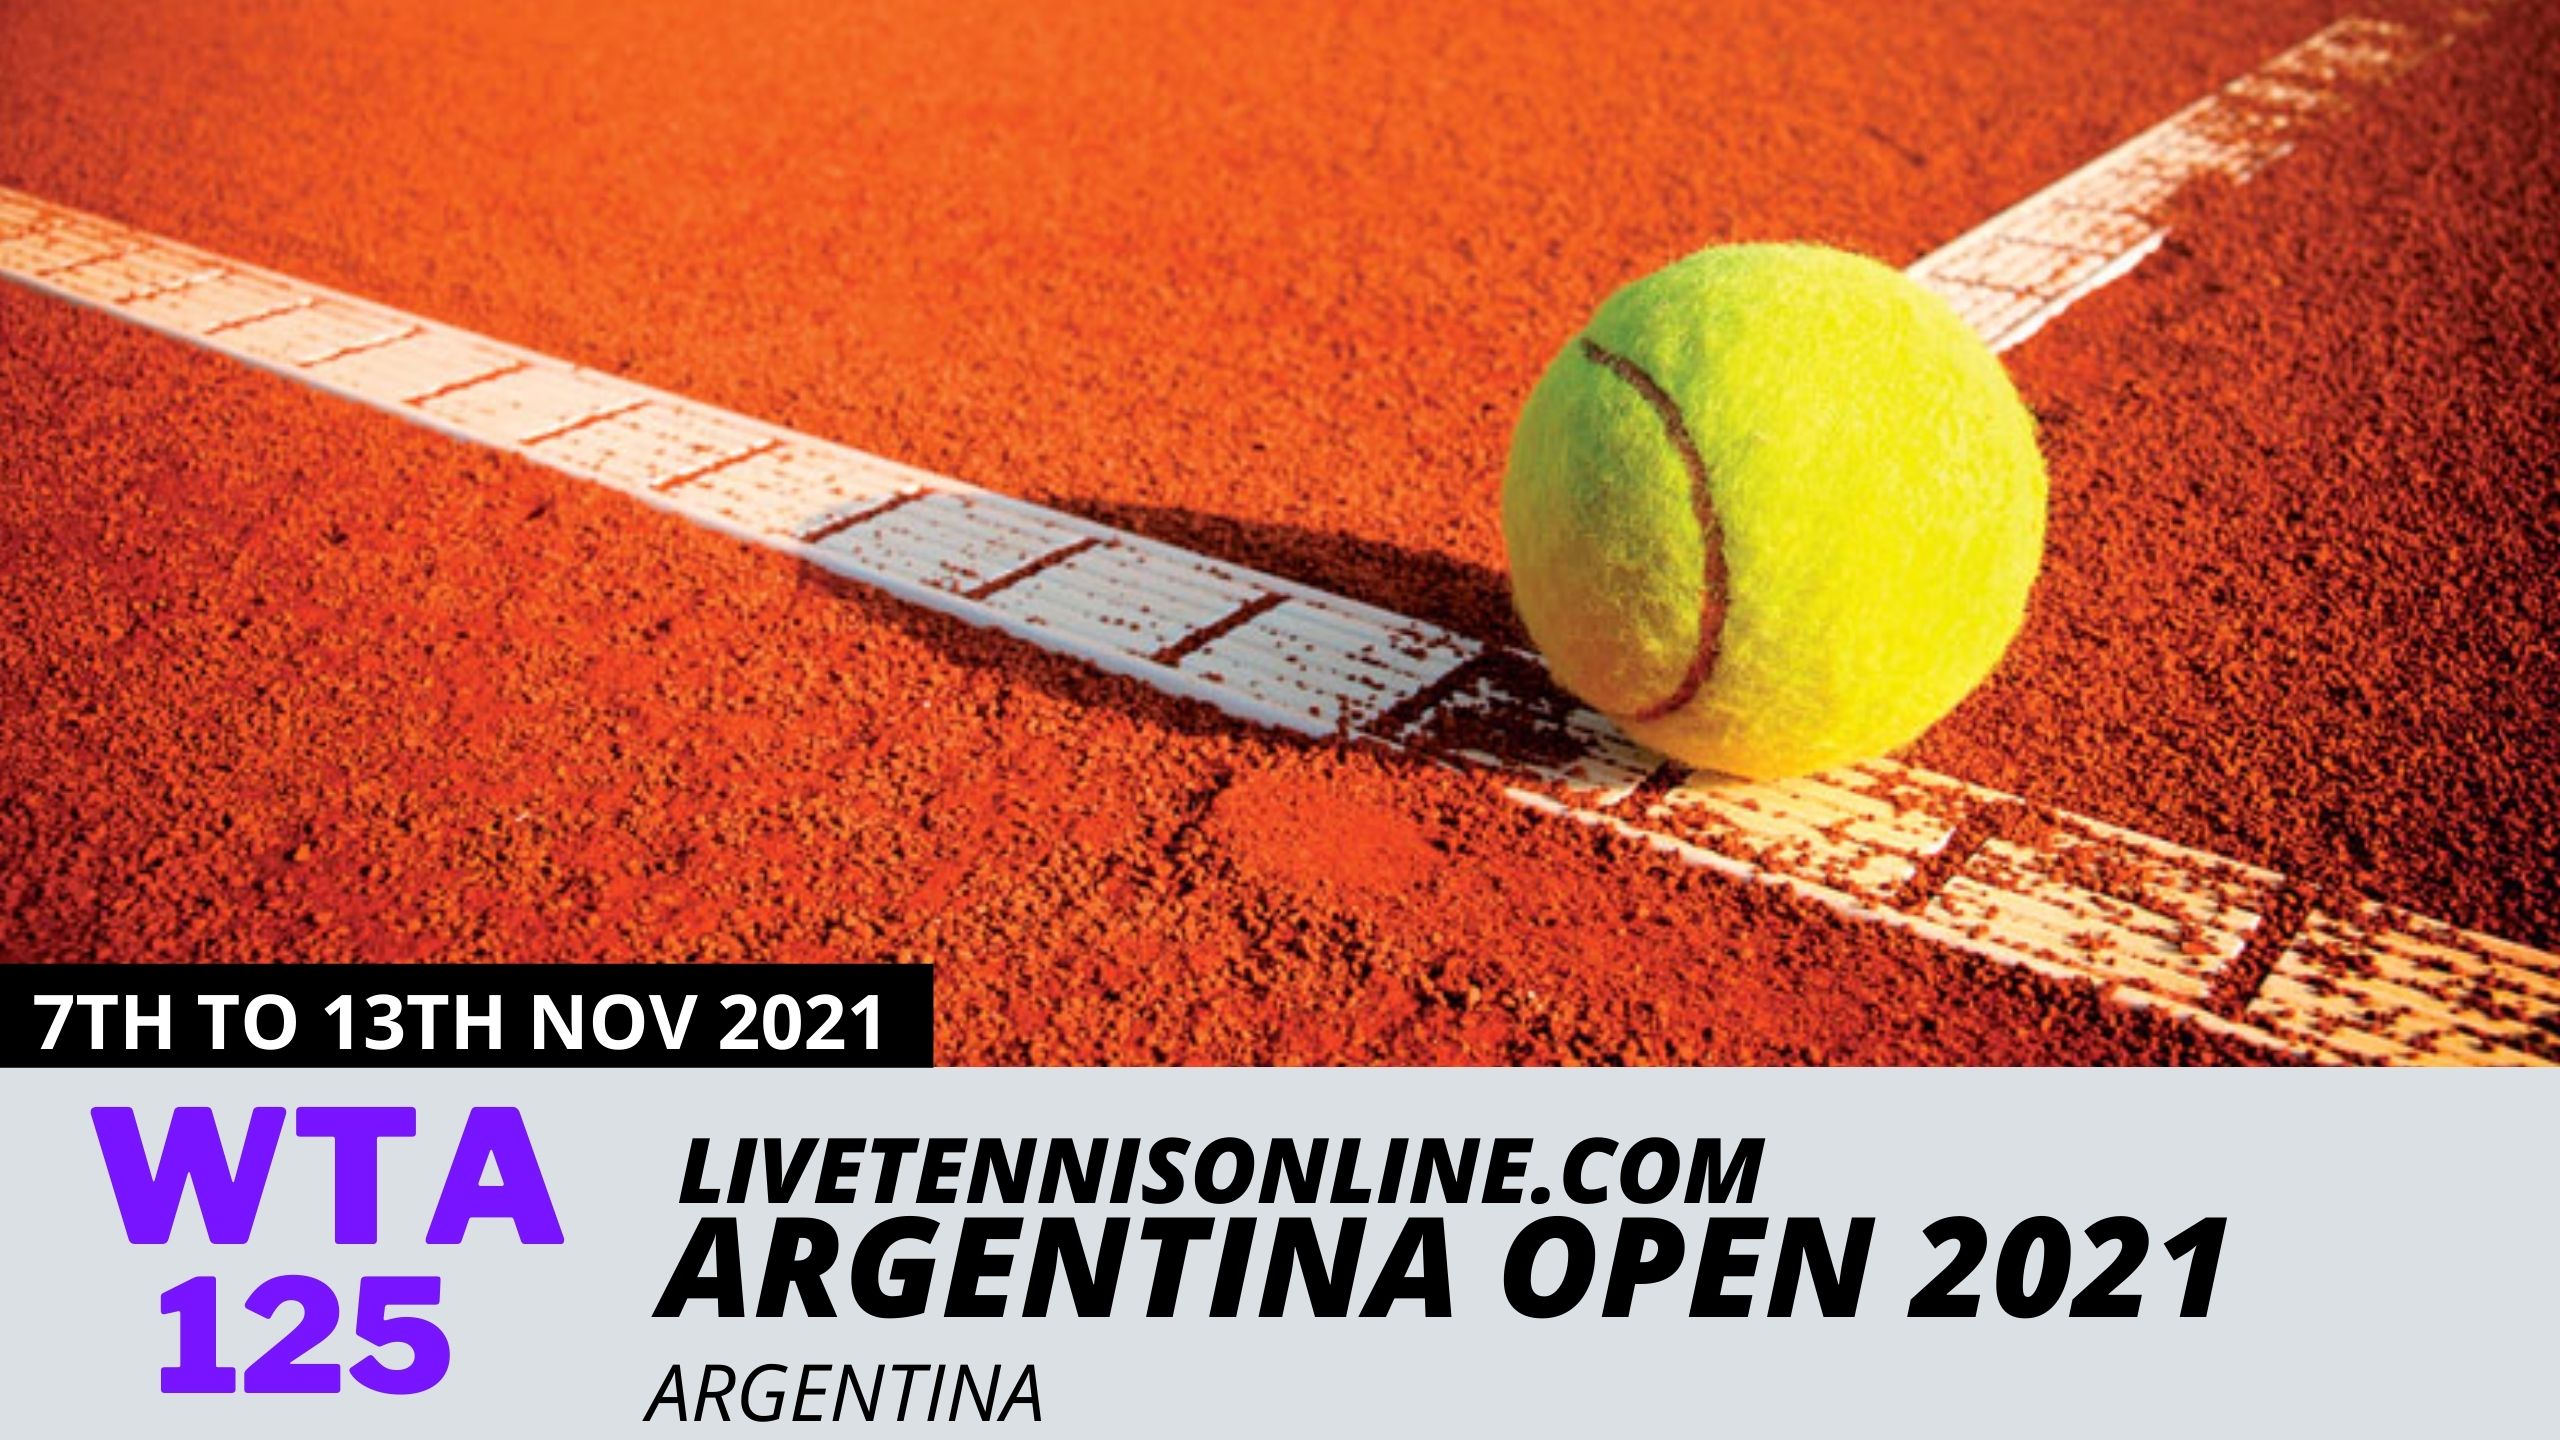 WTA Argentina Open Live Stream